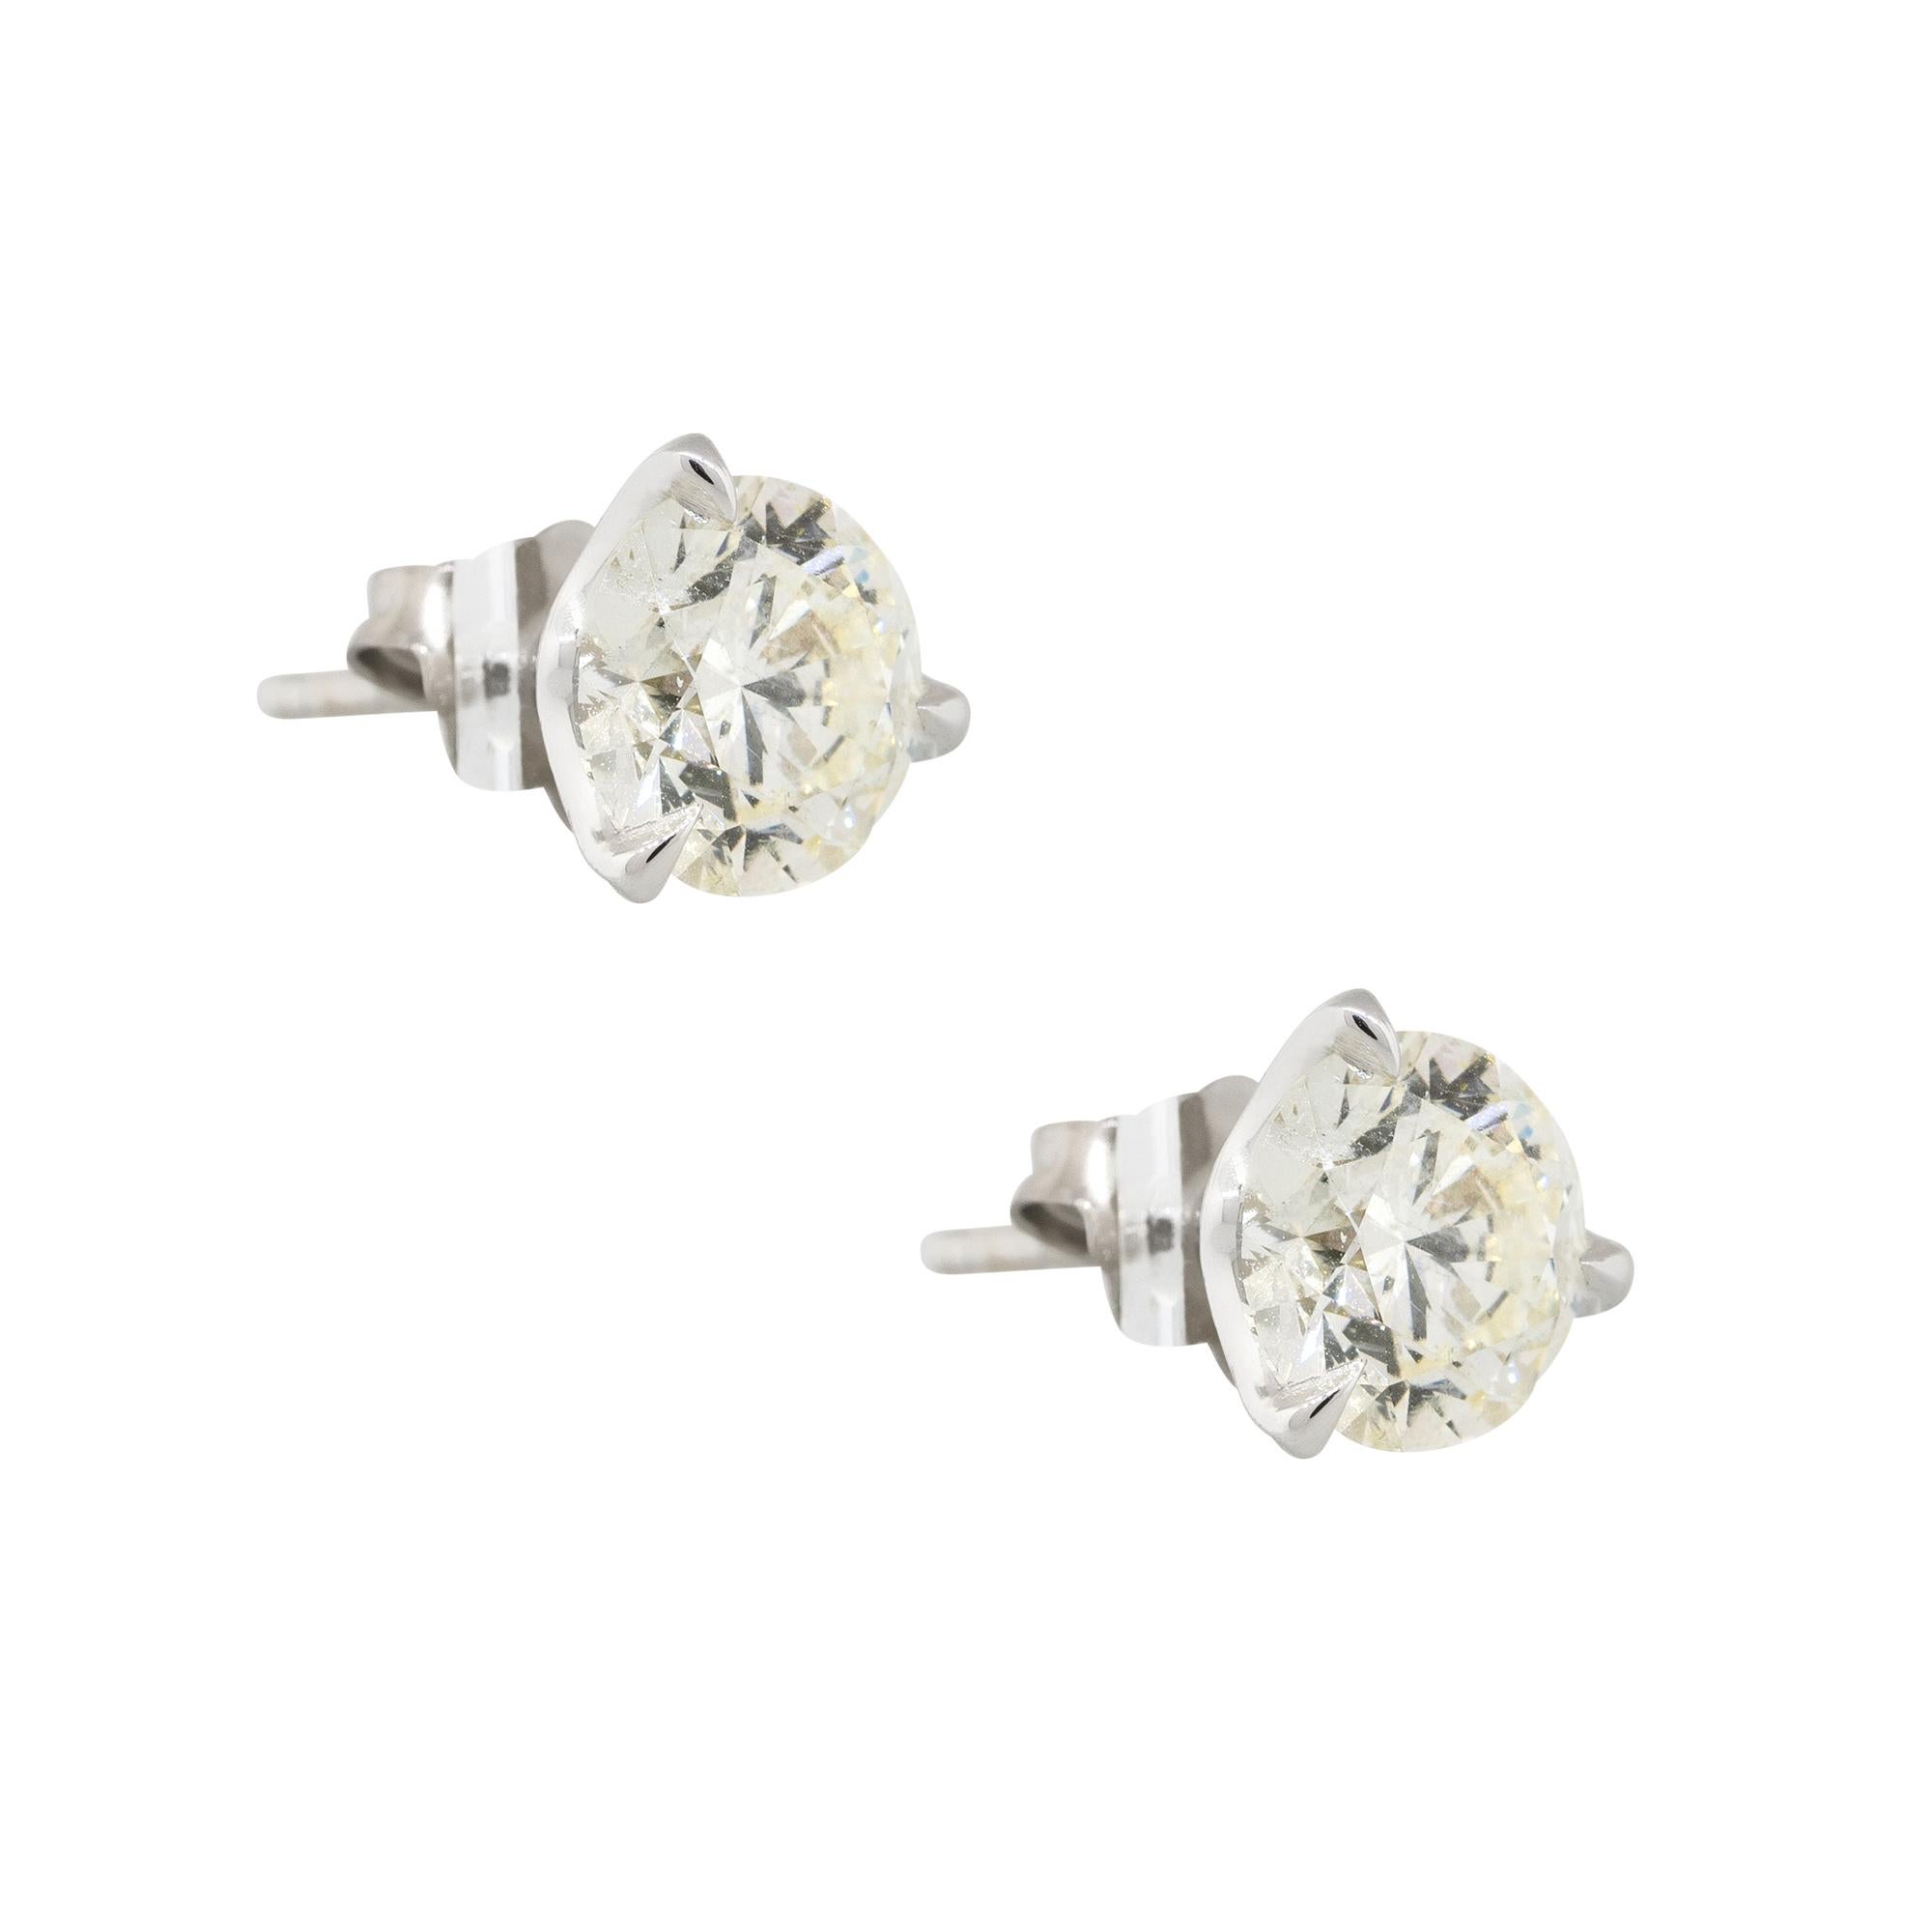 8mm diamond stud earrings